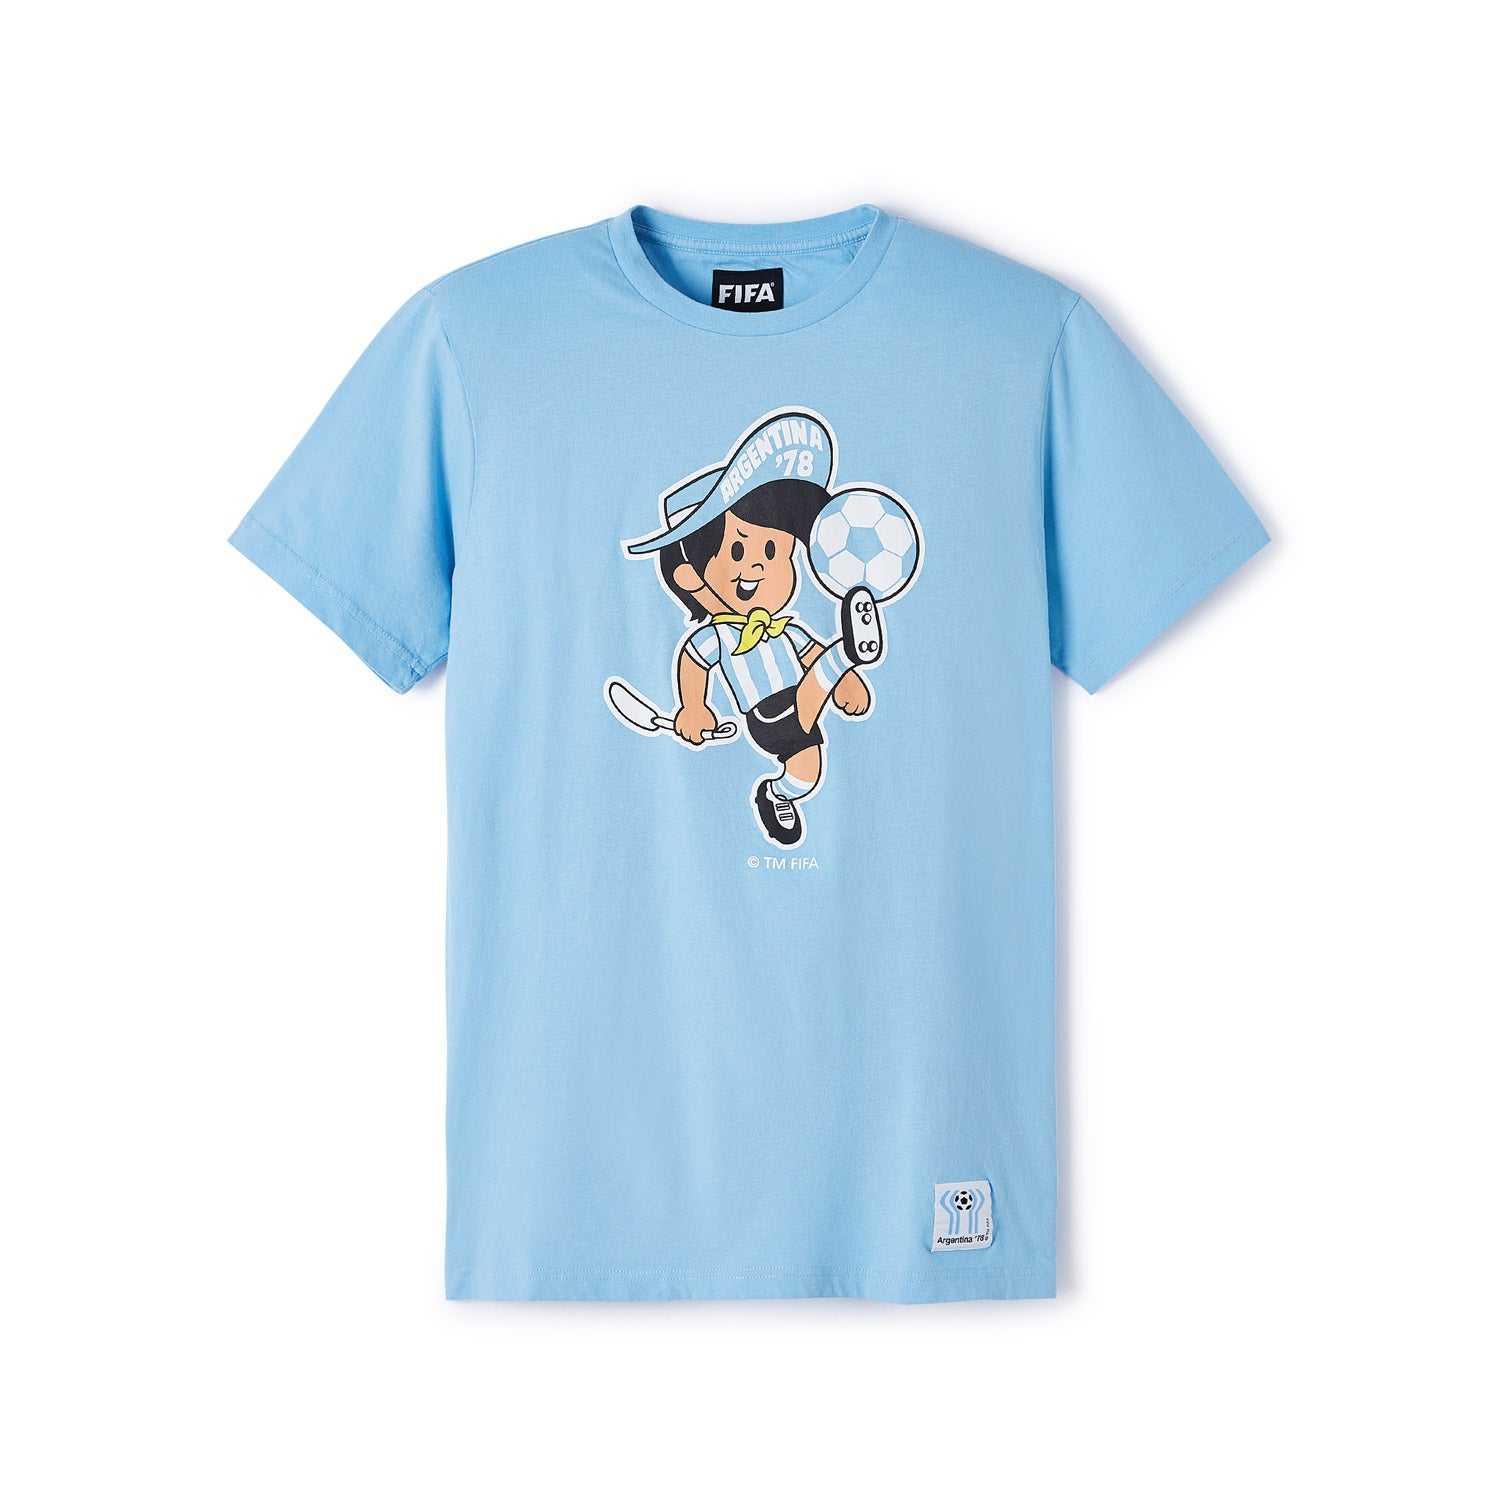 FIFA Rewind 1978 World Cup Mascot T-Shirt